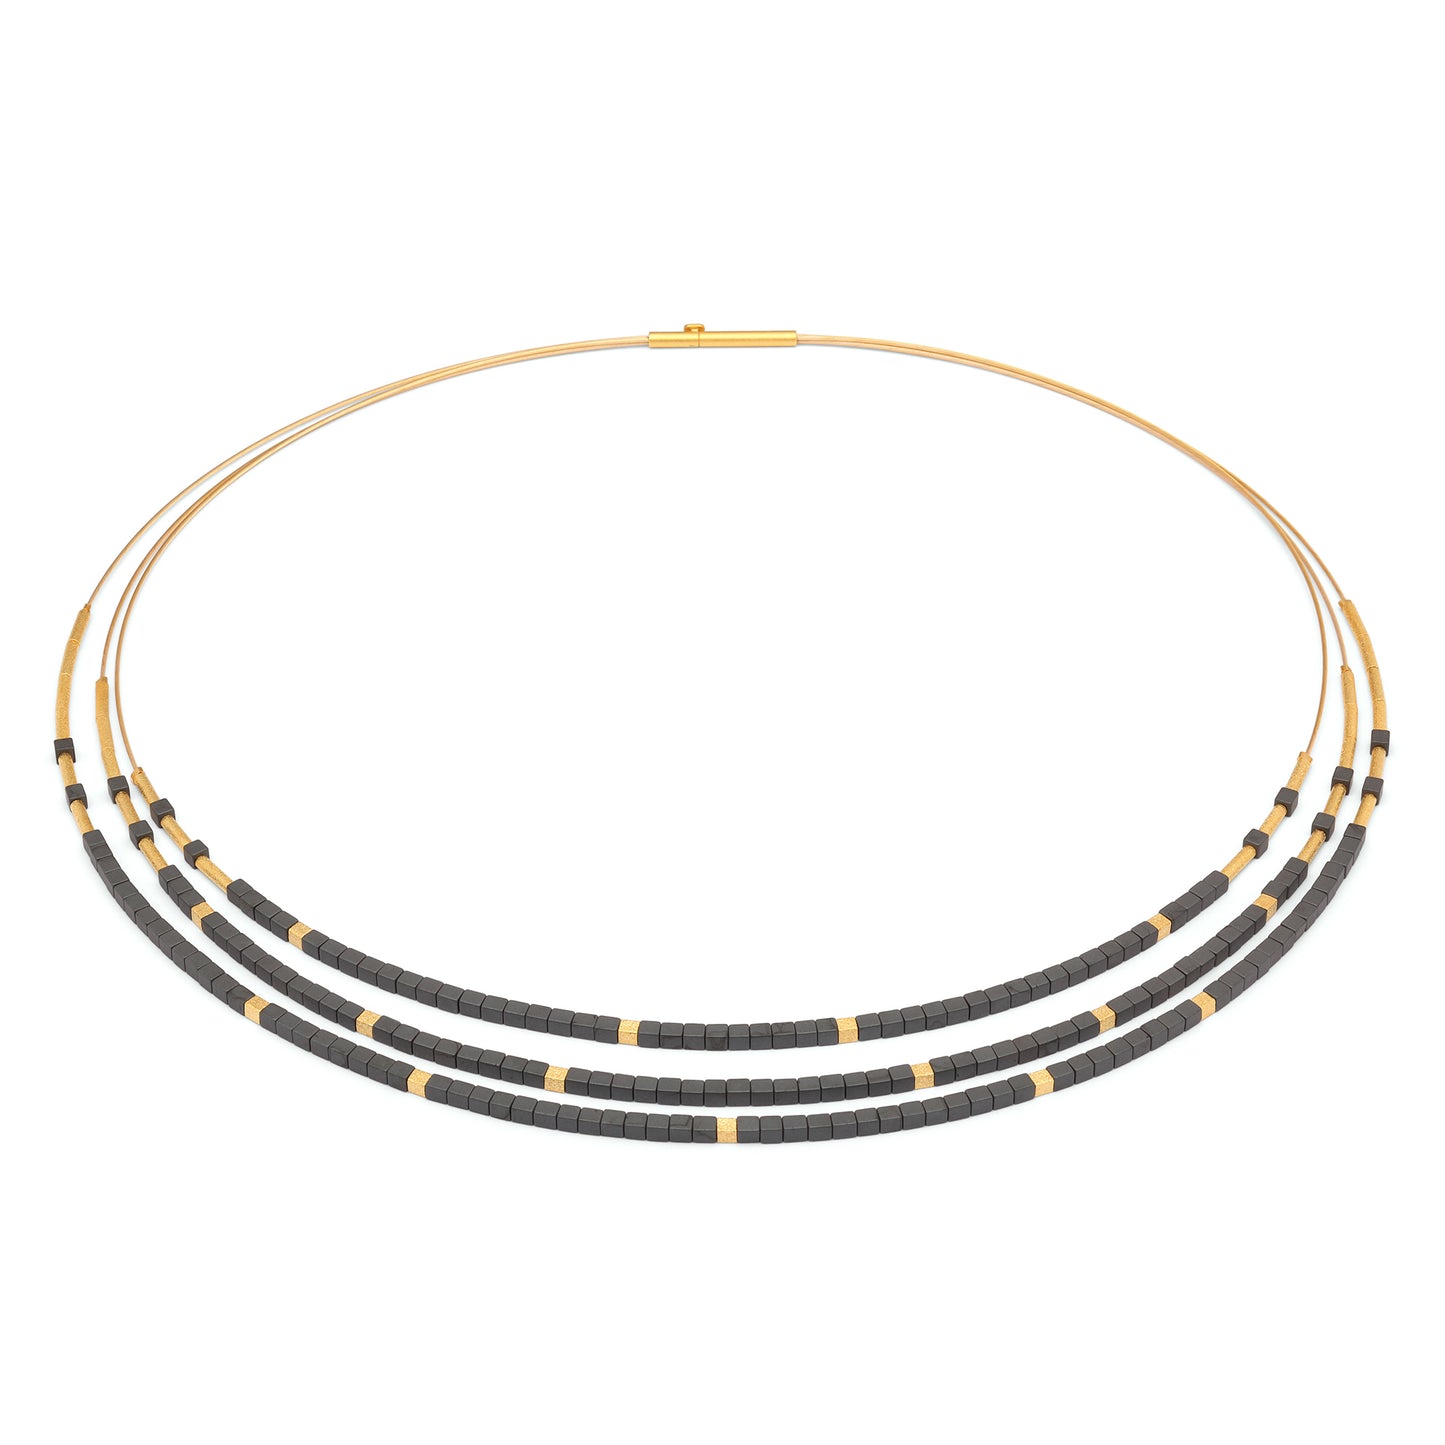 Bernd Wolf Collection "Cubaleni" Hematite Necklace